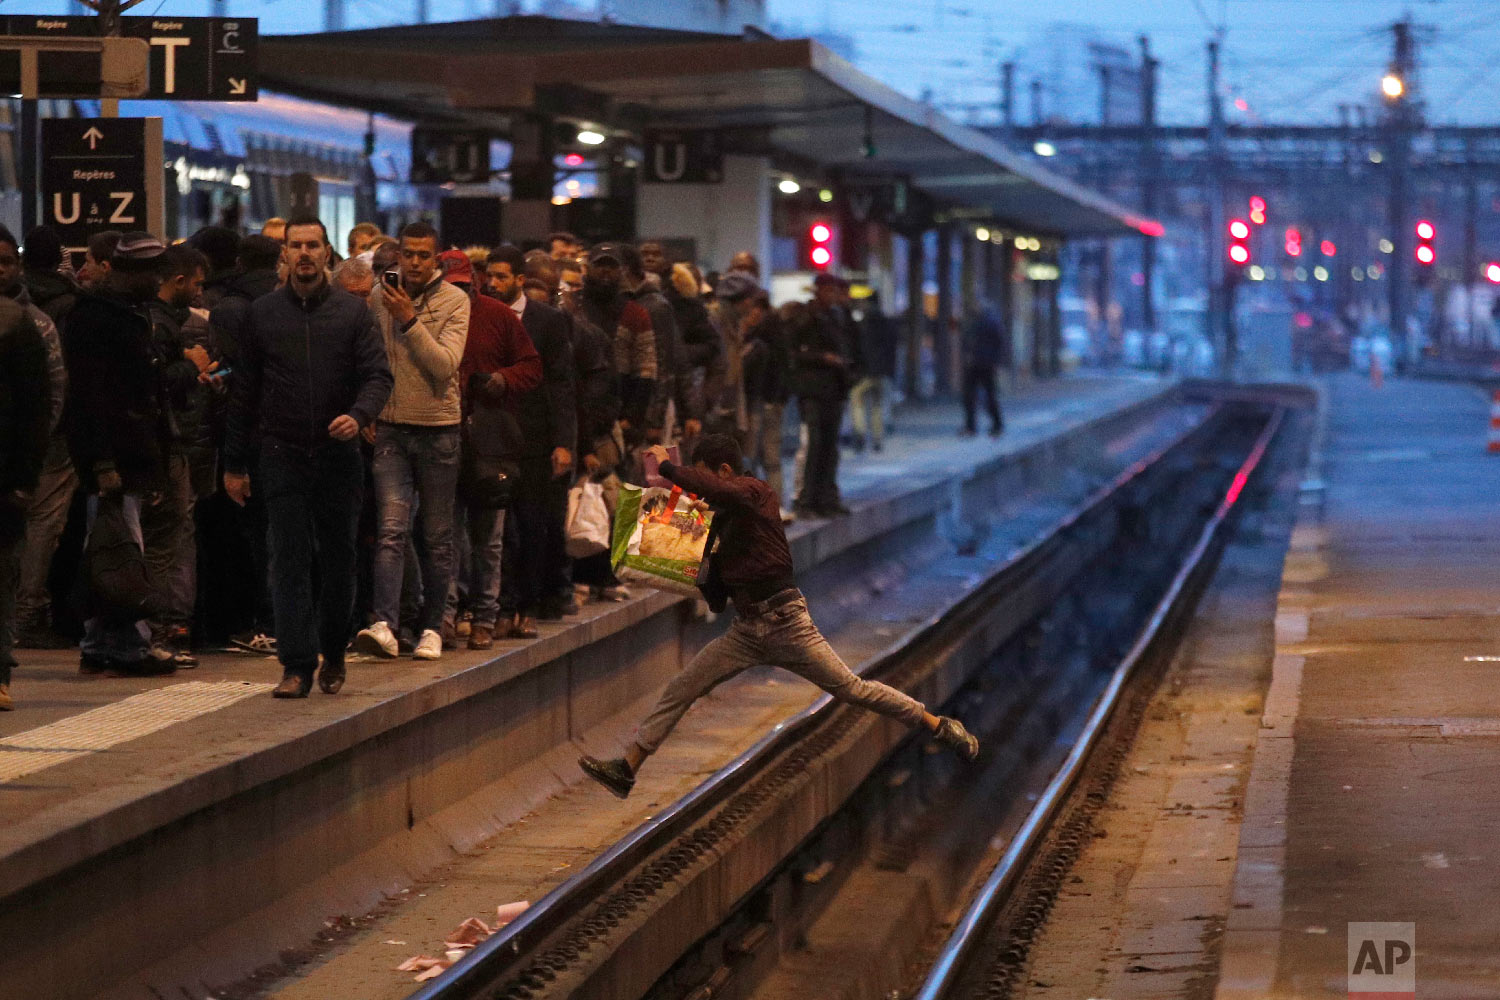  A passenger crosses railroad tracks at rush hour at Gare de Lyon train station, in Paris, France, as union stage a mass strike on April 3, 2018. (AP Photo/Francois Mori) 